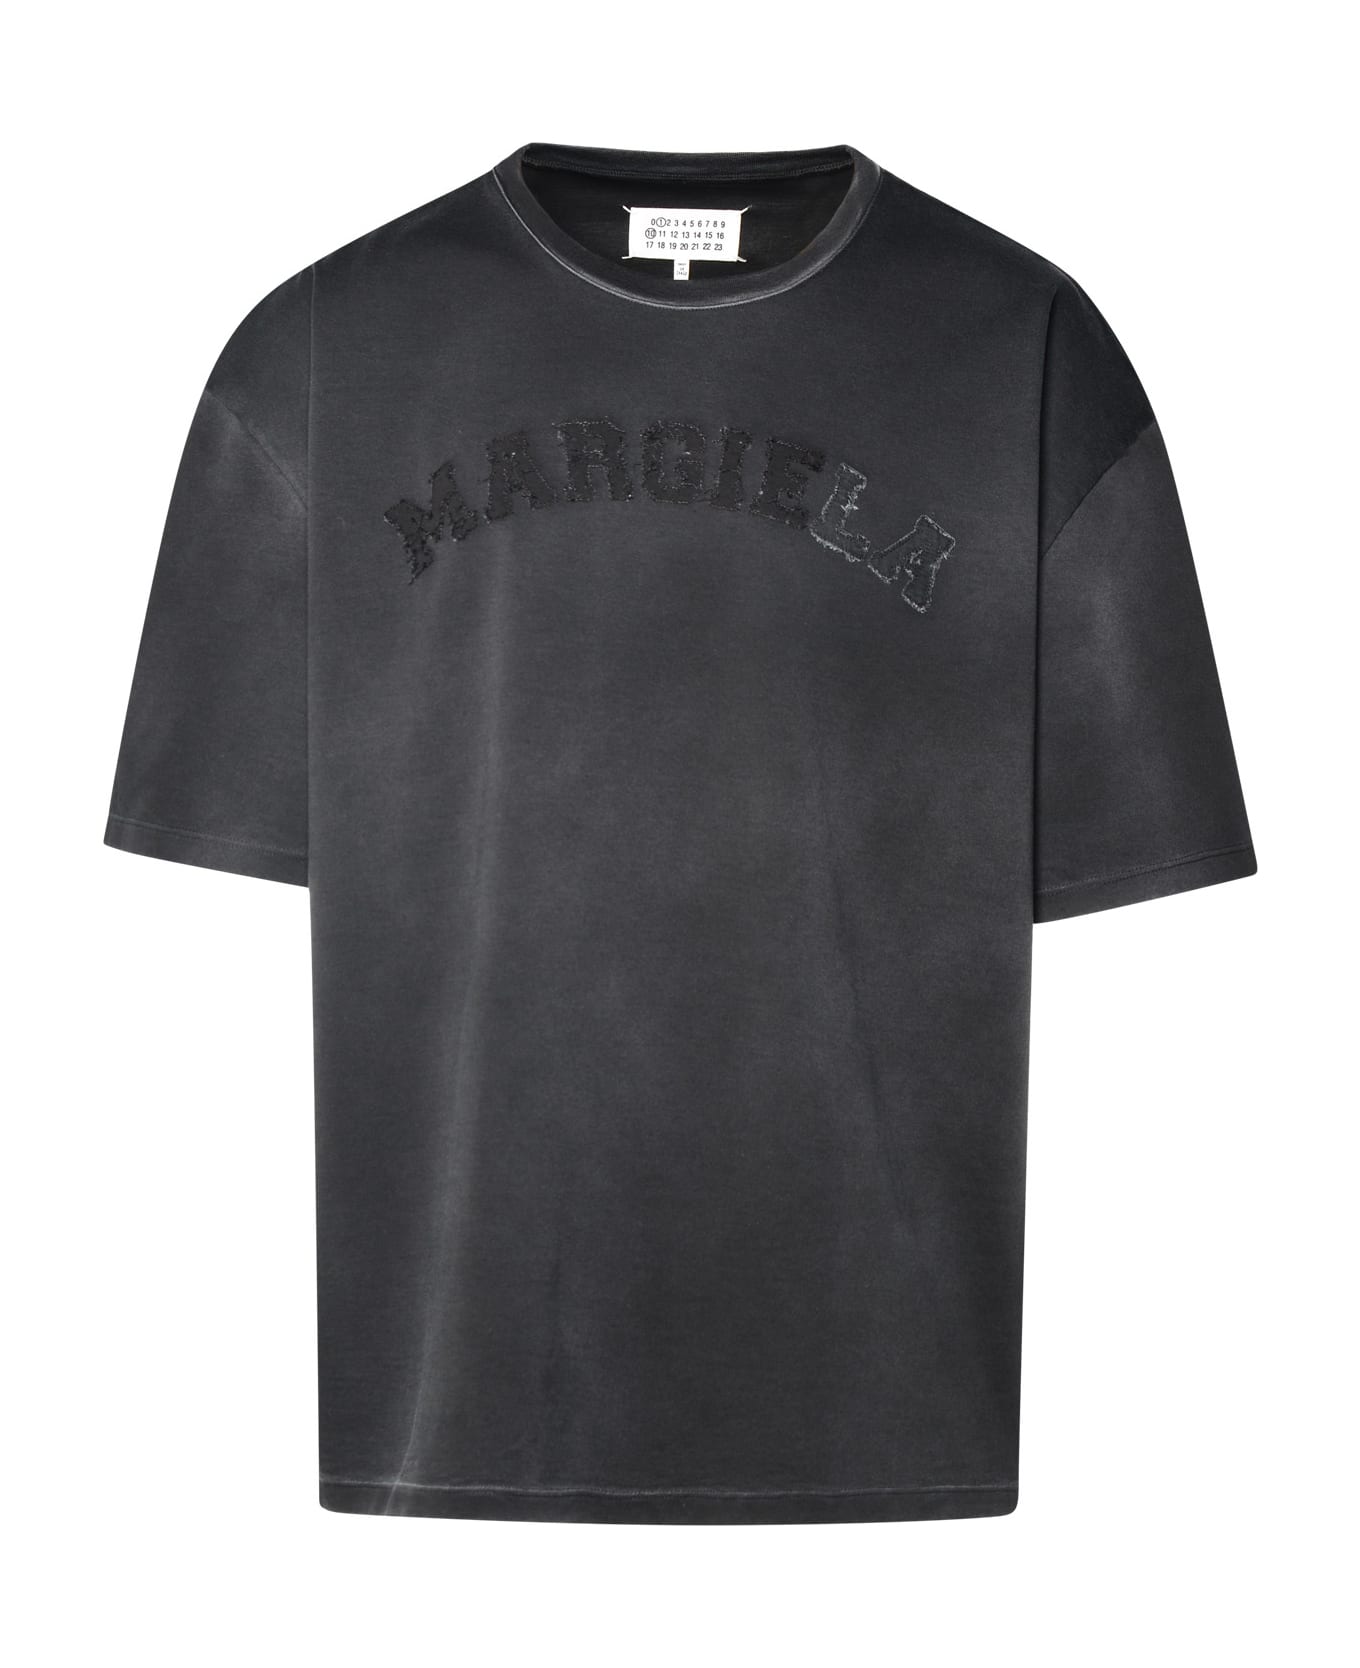 Maison Margiela Black Cotton T-shirt - GREY